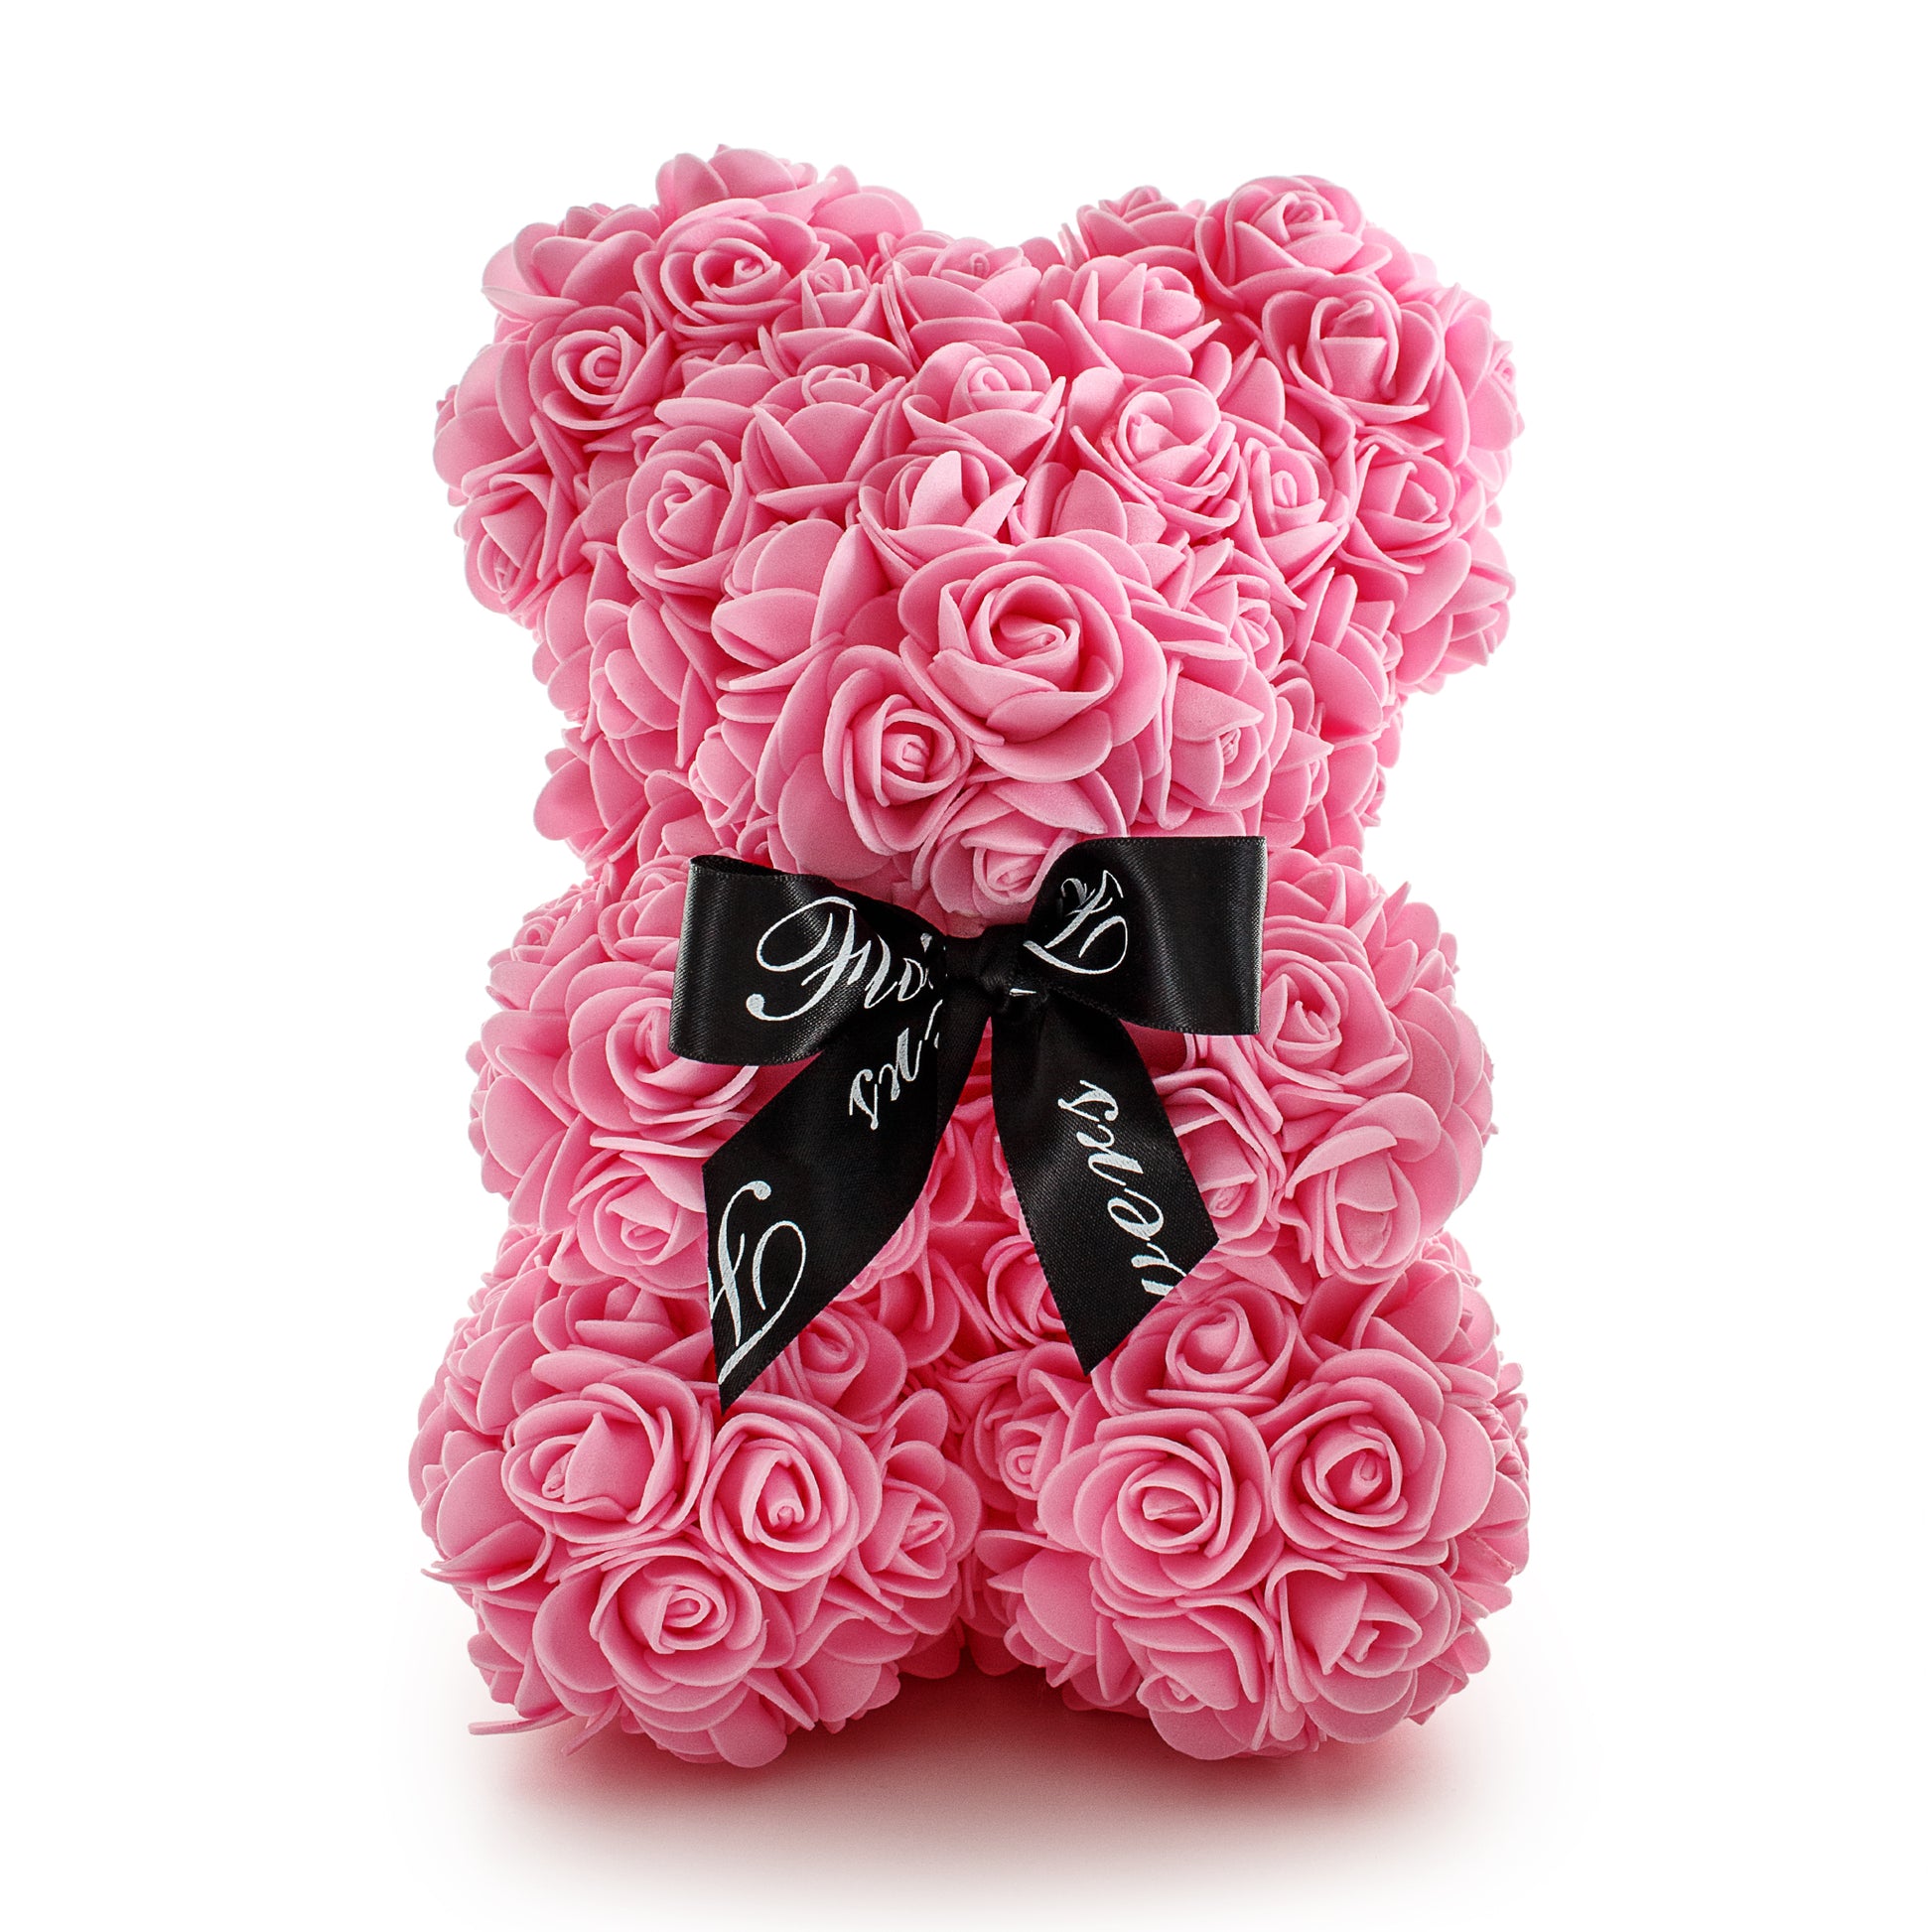 Rose Handmade Rose Teddy Bear -1